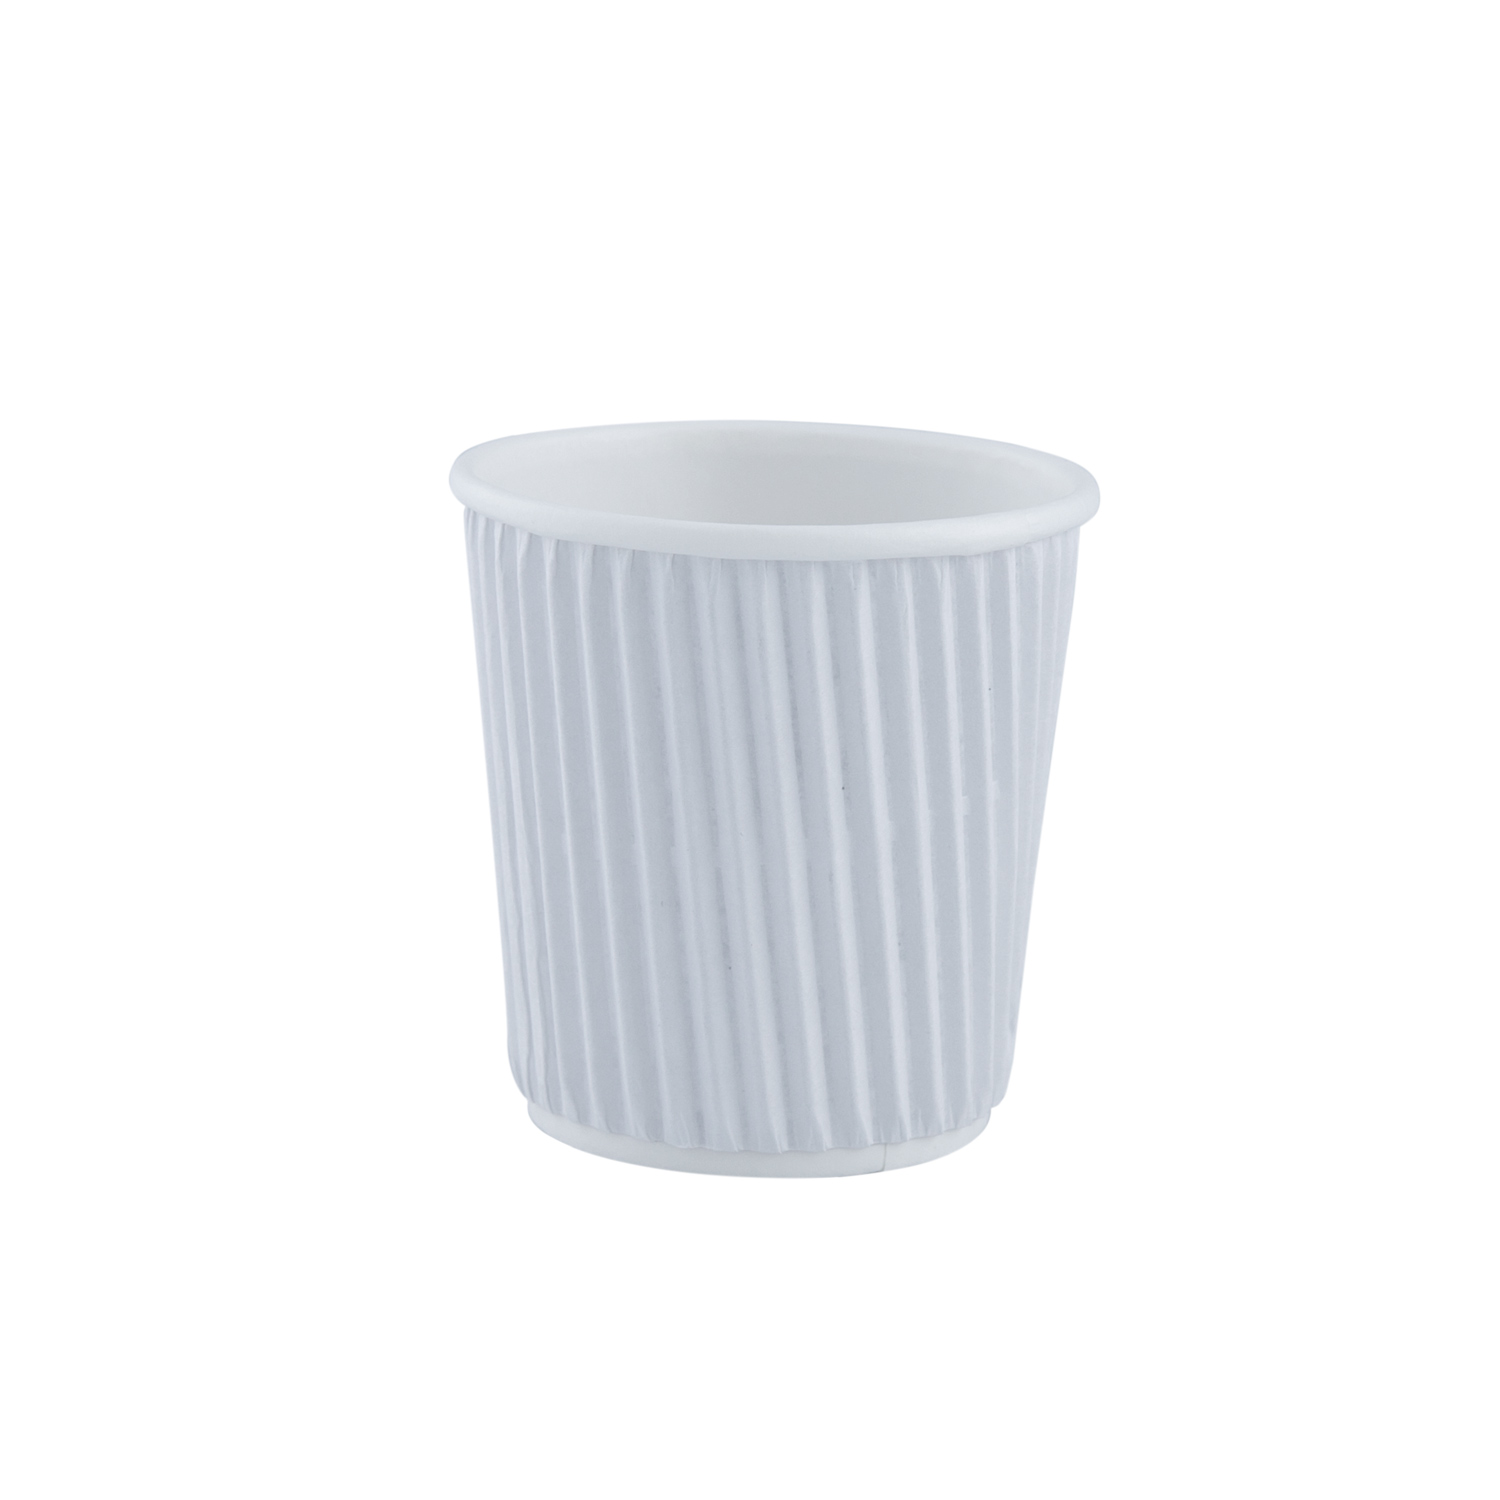 Ripple paper Cups (4 oz, White Colour)